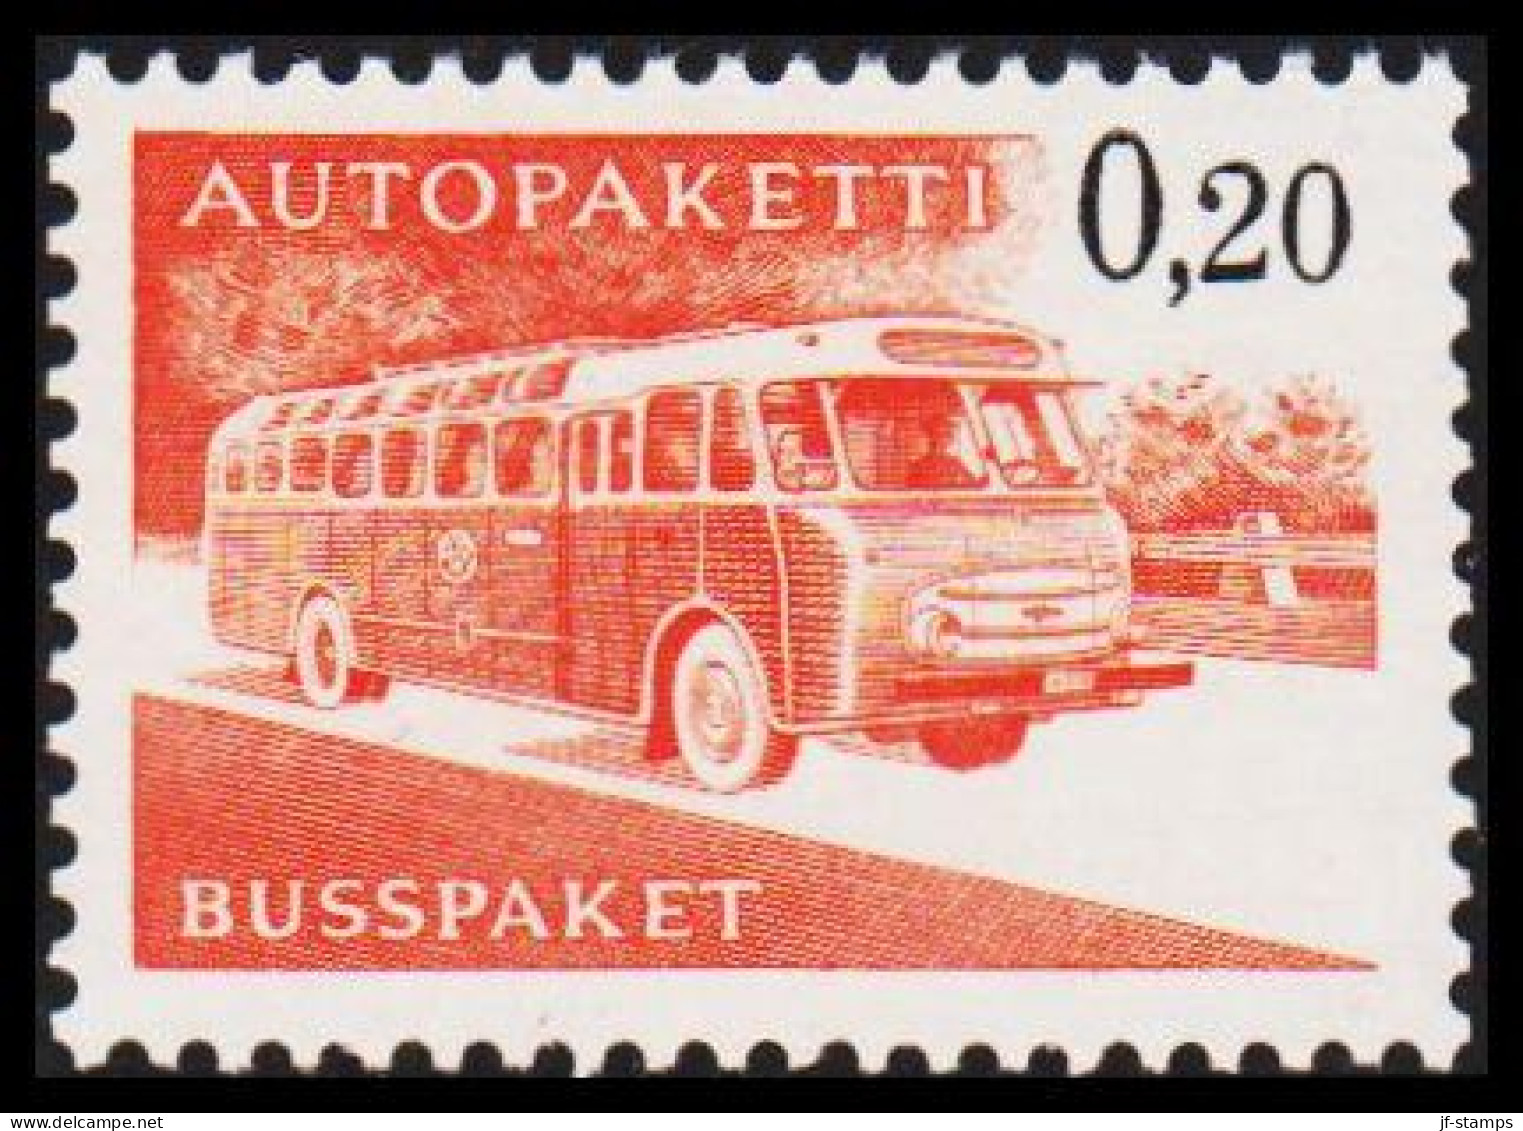 1963-1980. FINLAND. Mail Bus. 0,20 Mk. AUTOPAKETTI - BUSSPAKET Never Hinged. Lumogen. Whit... (Michel AP 11y) - JF535623 - Pakjes Per Postbus